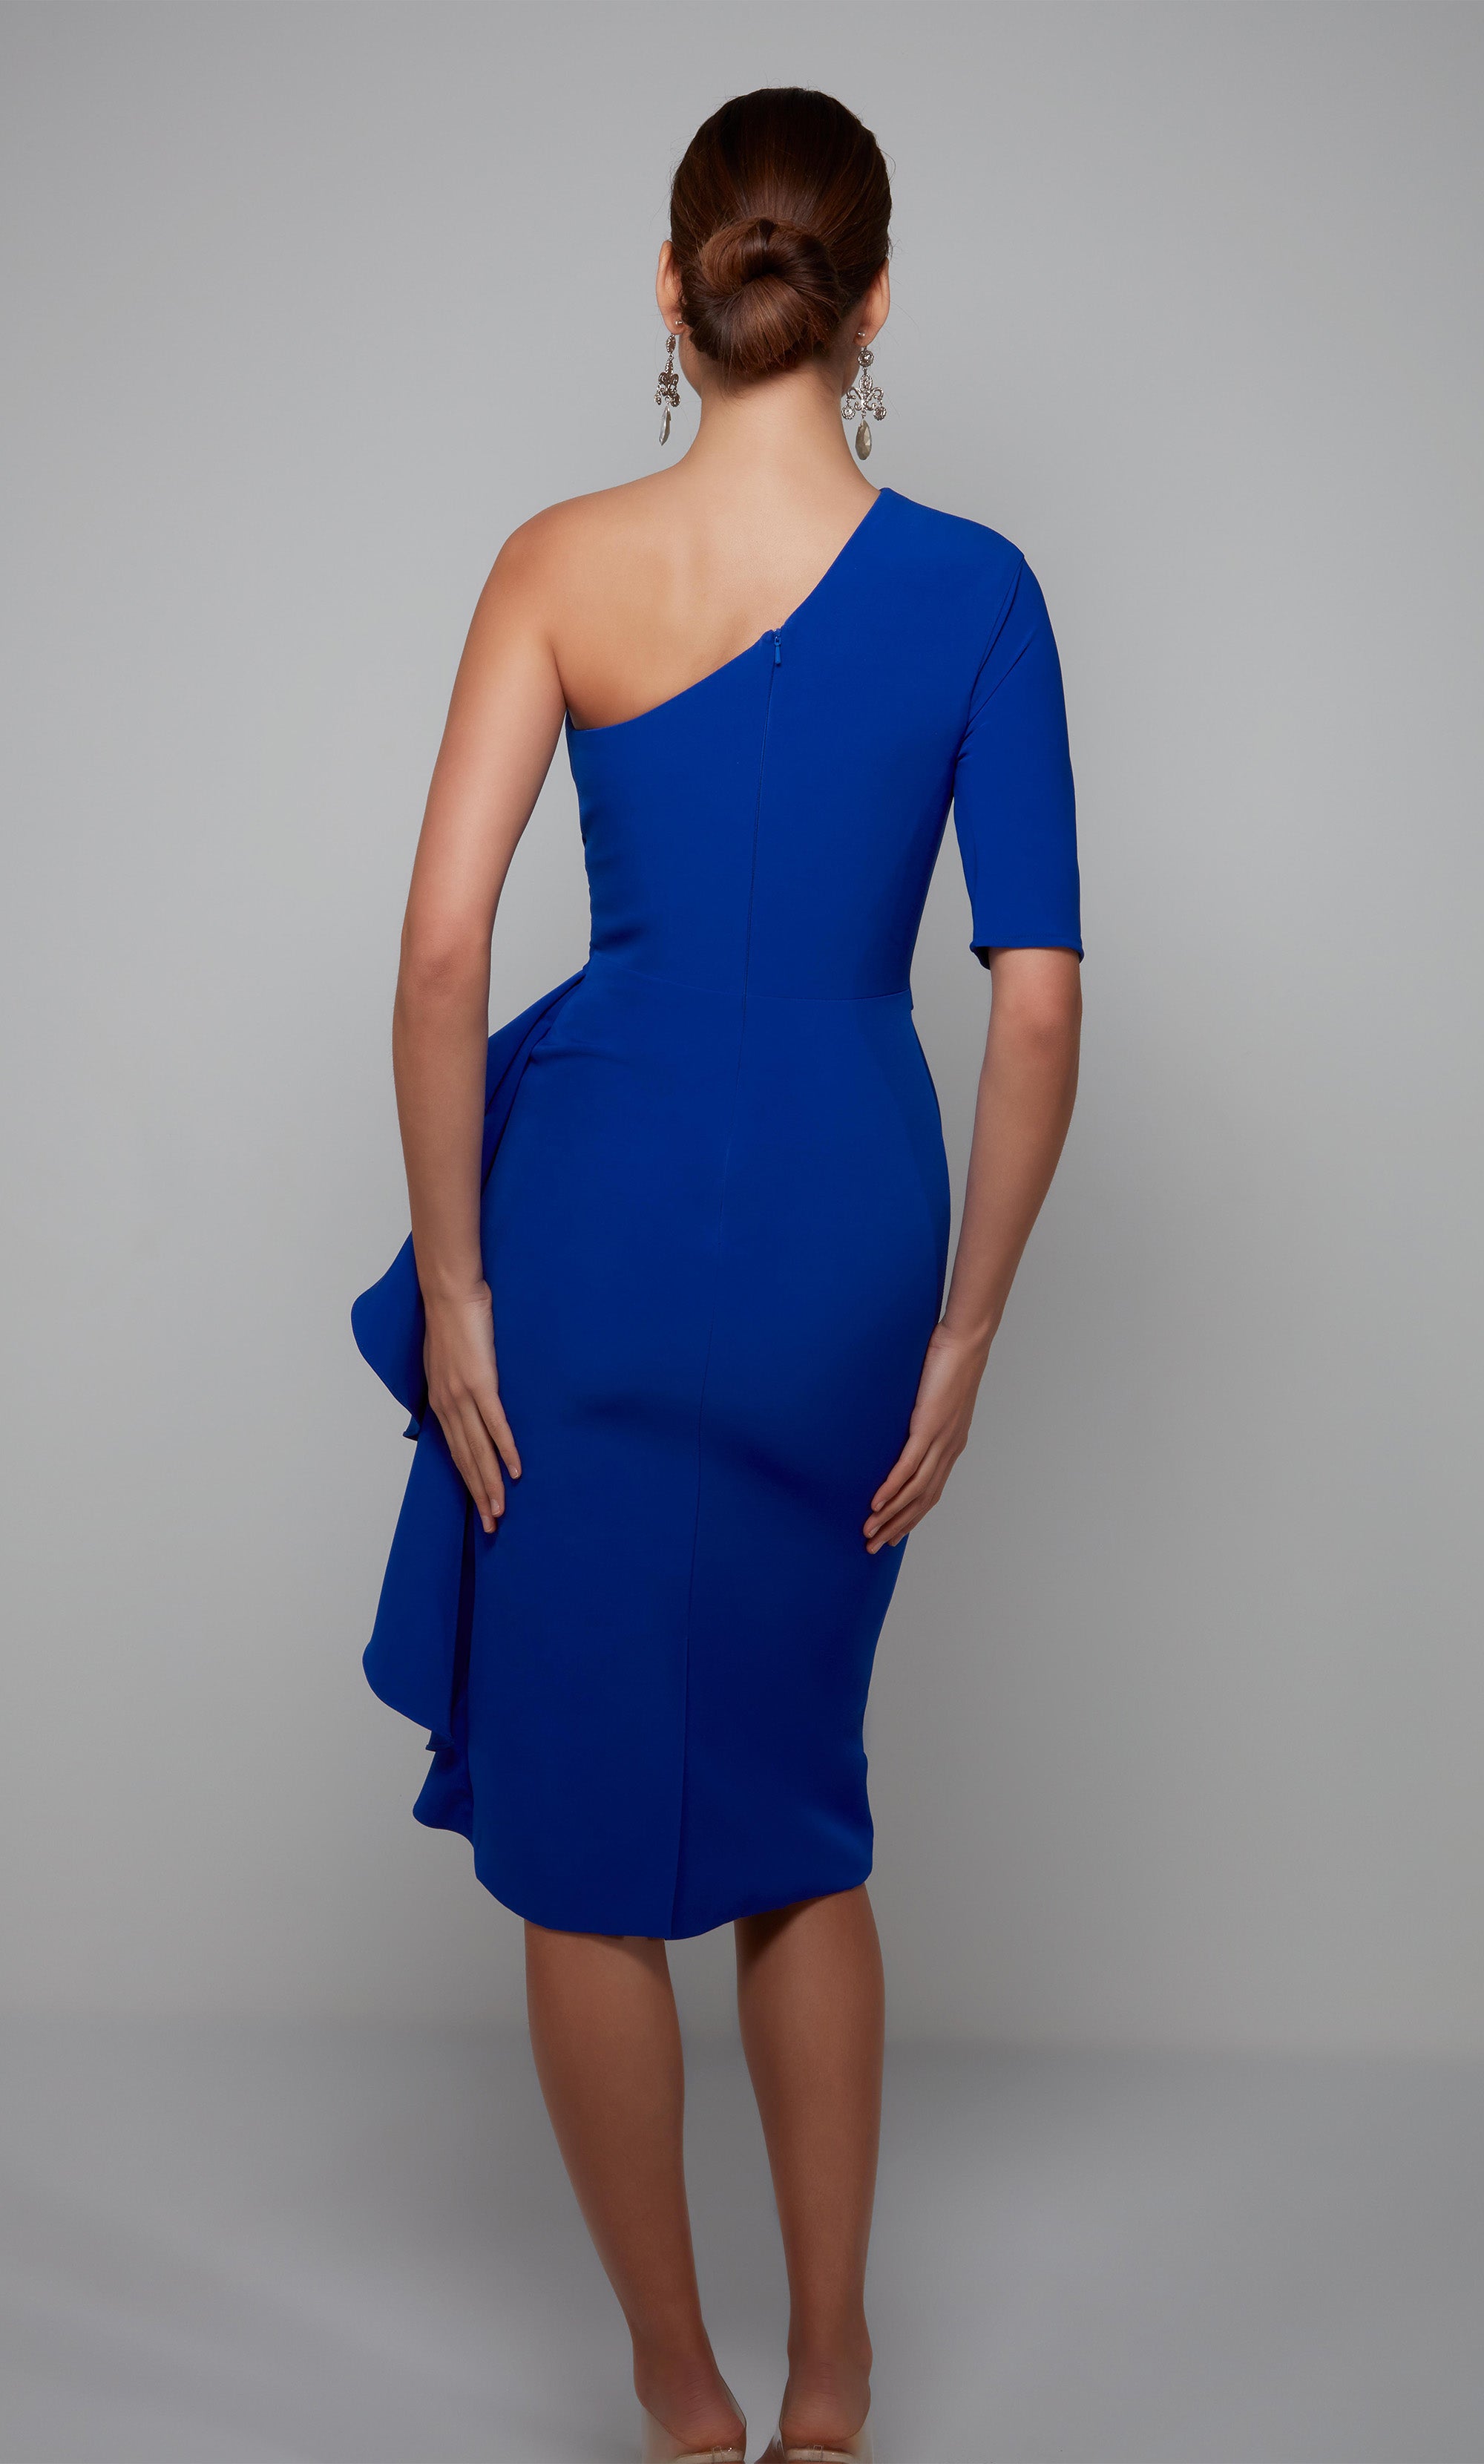 Blue Midi Dress - Sexy One-Shoulder Dress - Midi Cocktail Dress - Lulus